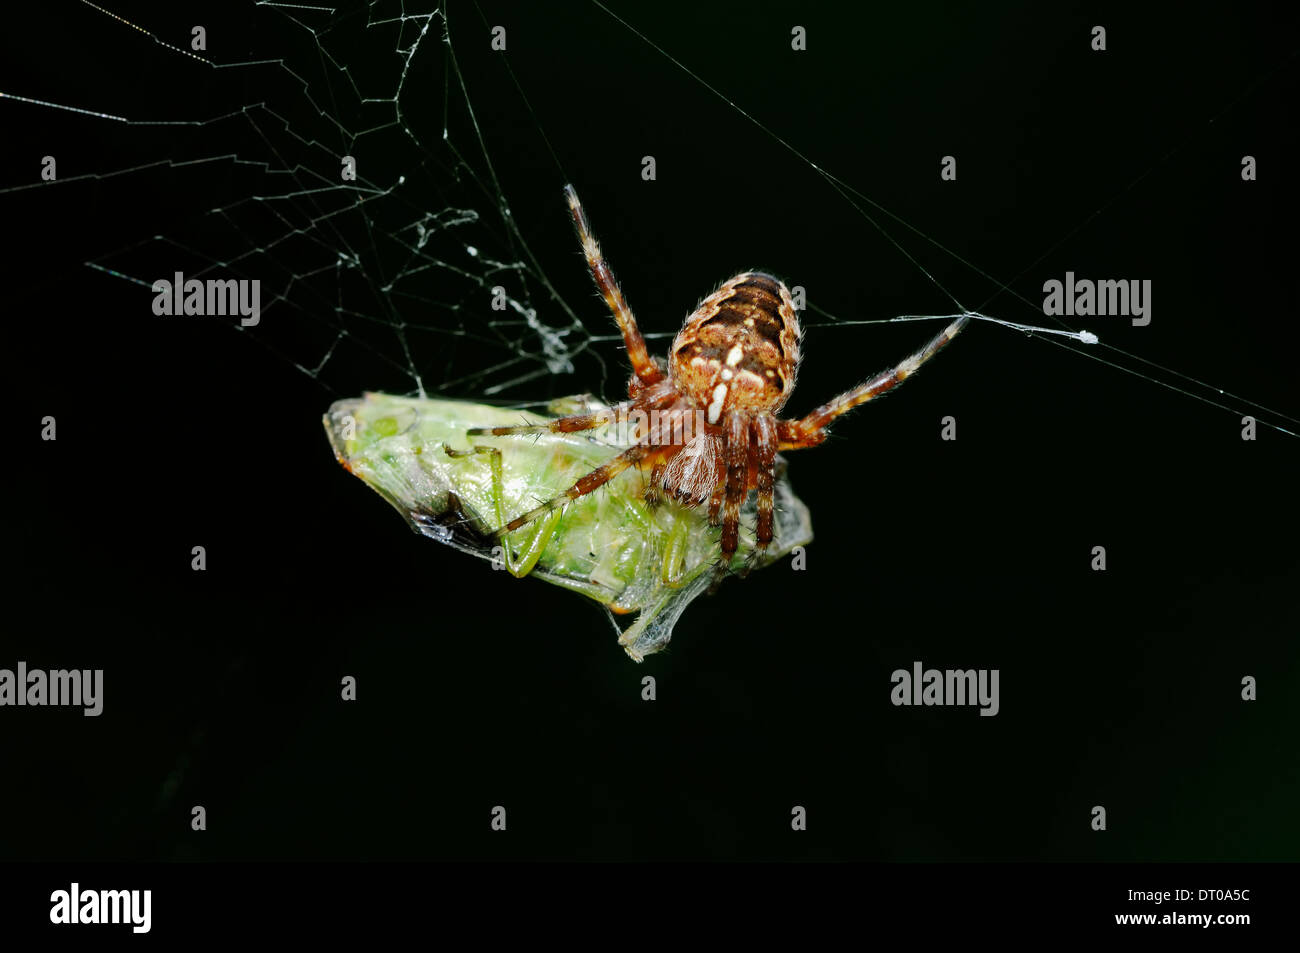 Croce Orbweaver , Croce Spider, giardino europeo Spider (Araneus diadematus) in web con la preda, Nord Reno-Westfalia, Germania Foto Stock